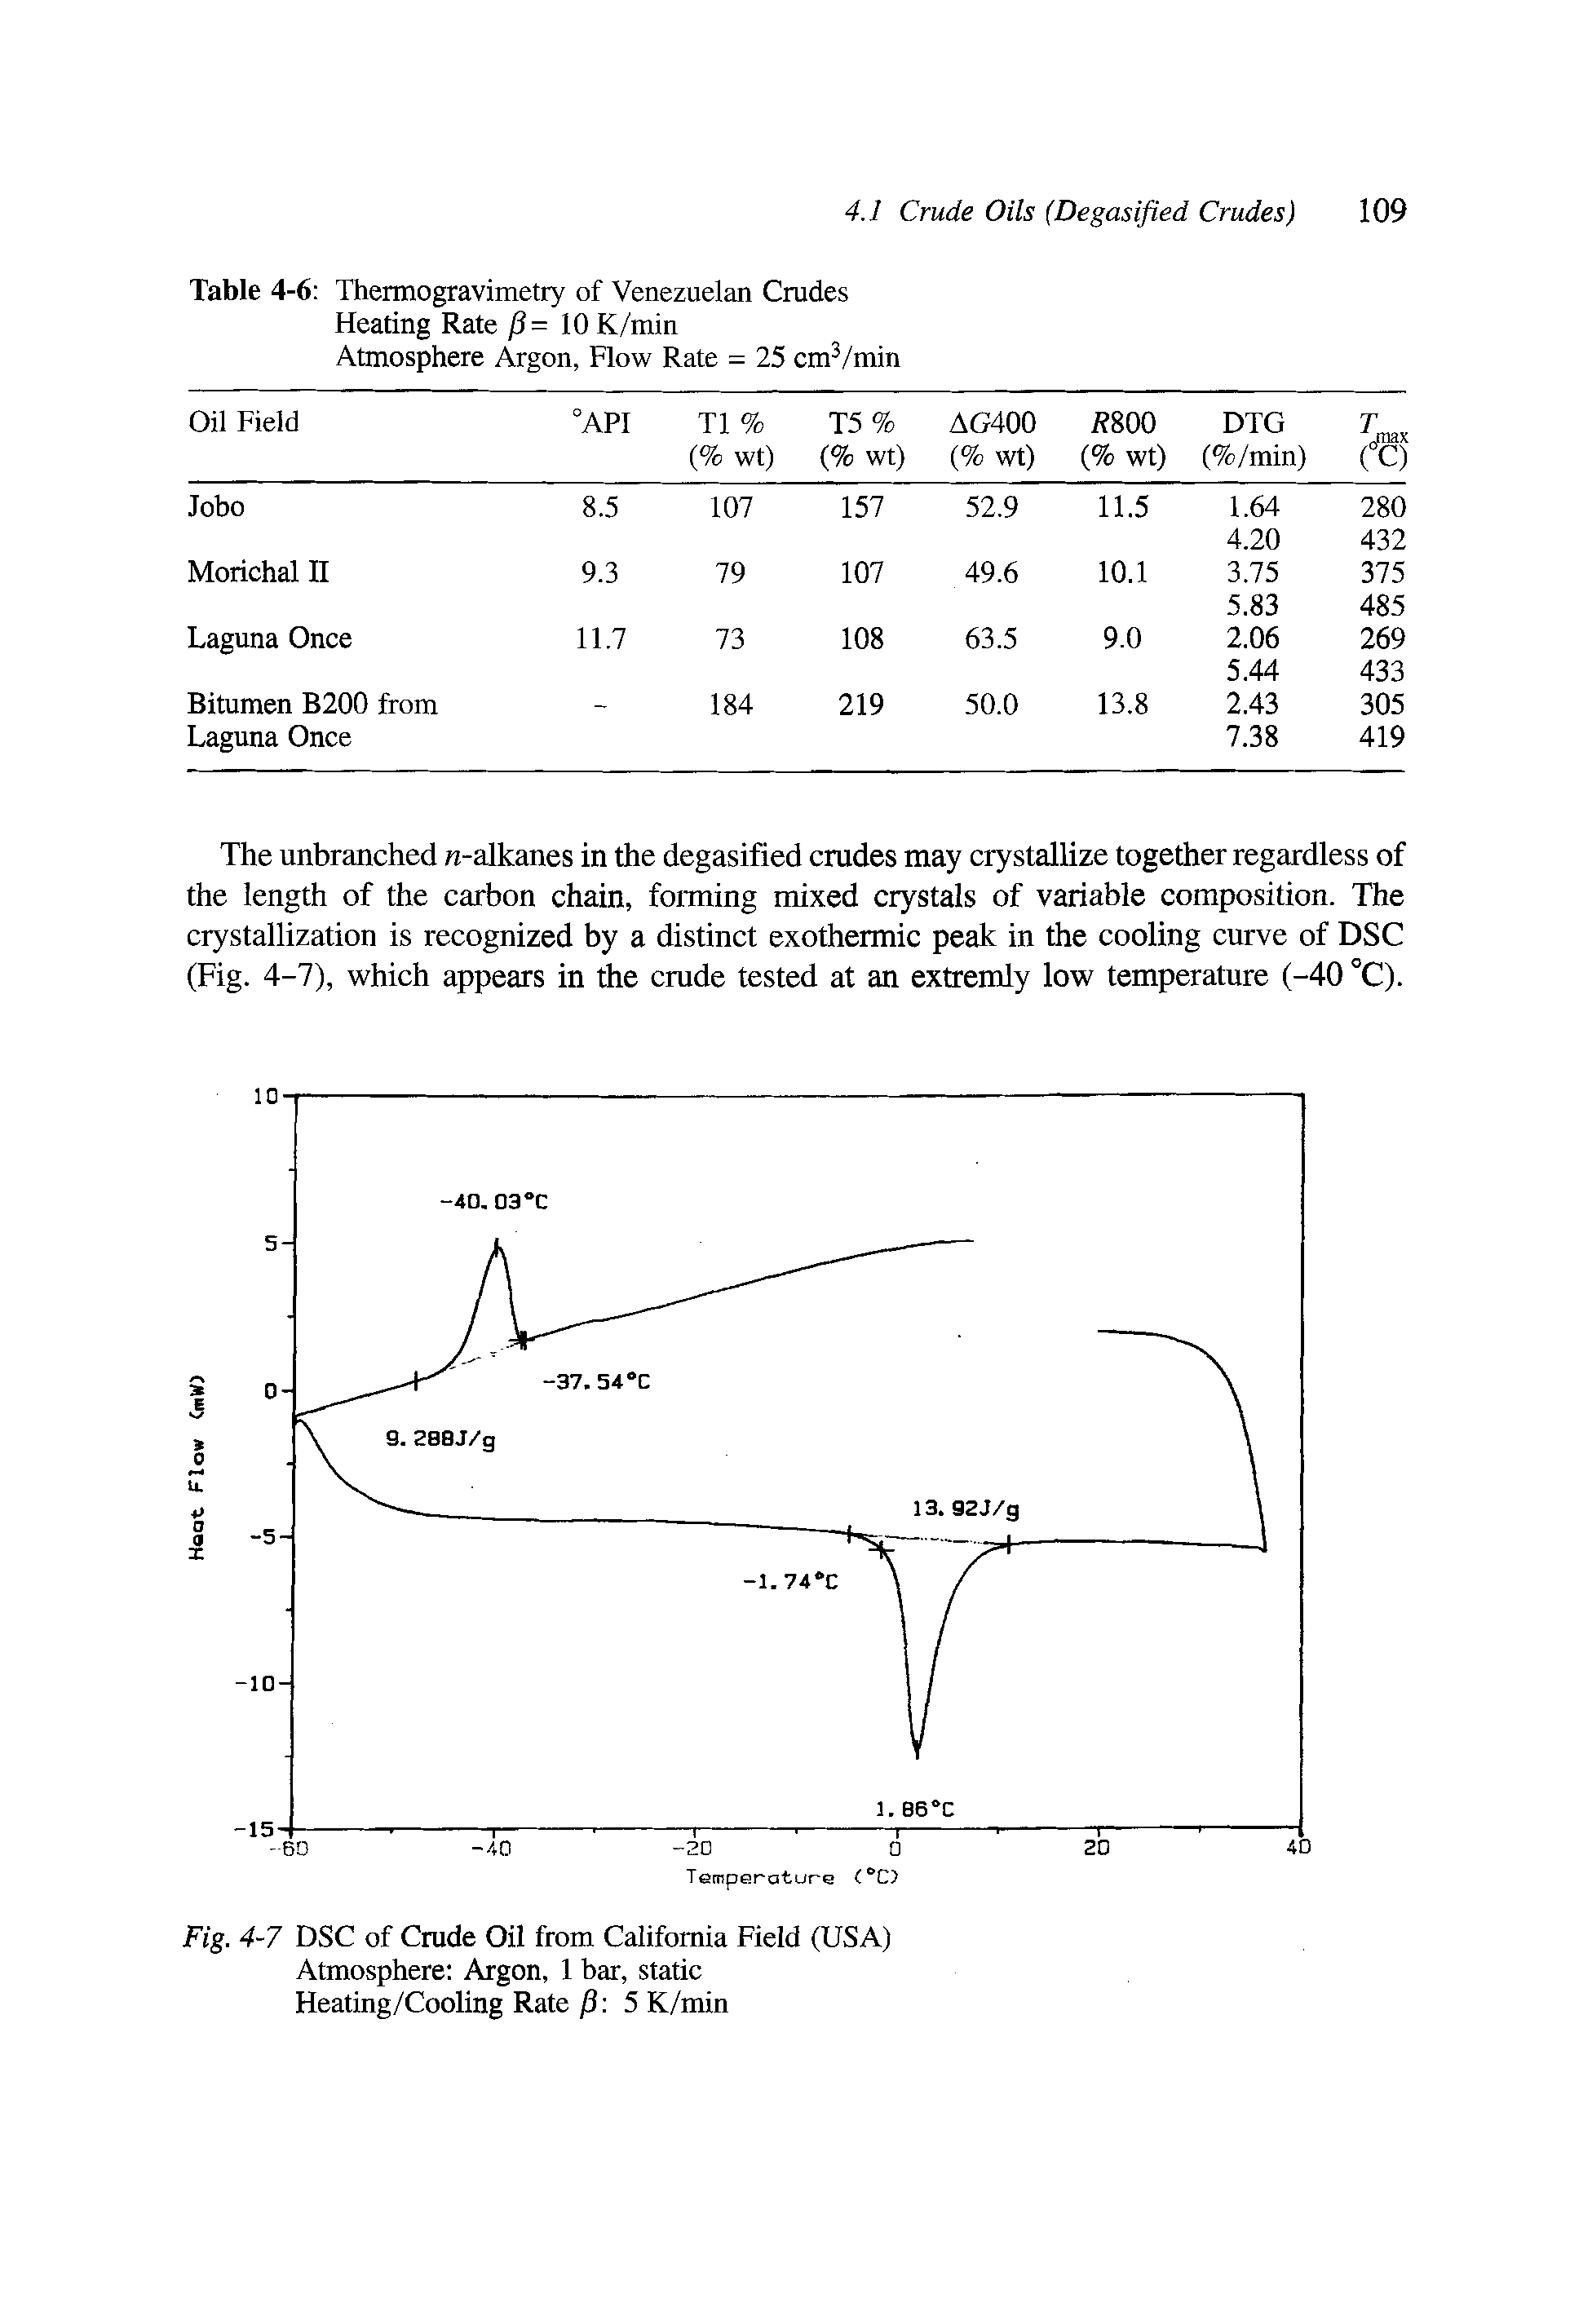 Table 4-6 Thermogravimetry of Venezuelan Crudes Heating Rate f)= lOK/min Atmosphere Argon, Flow Rate = 25 cm /min...